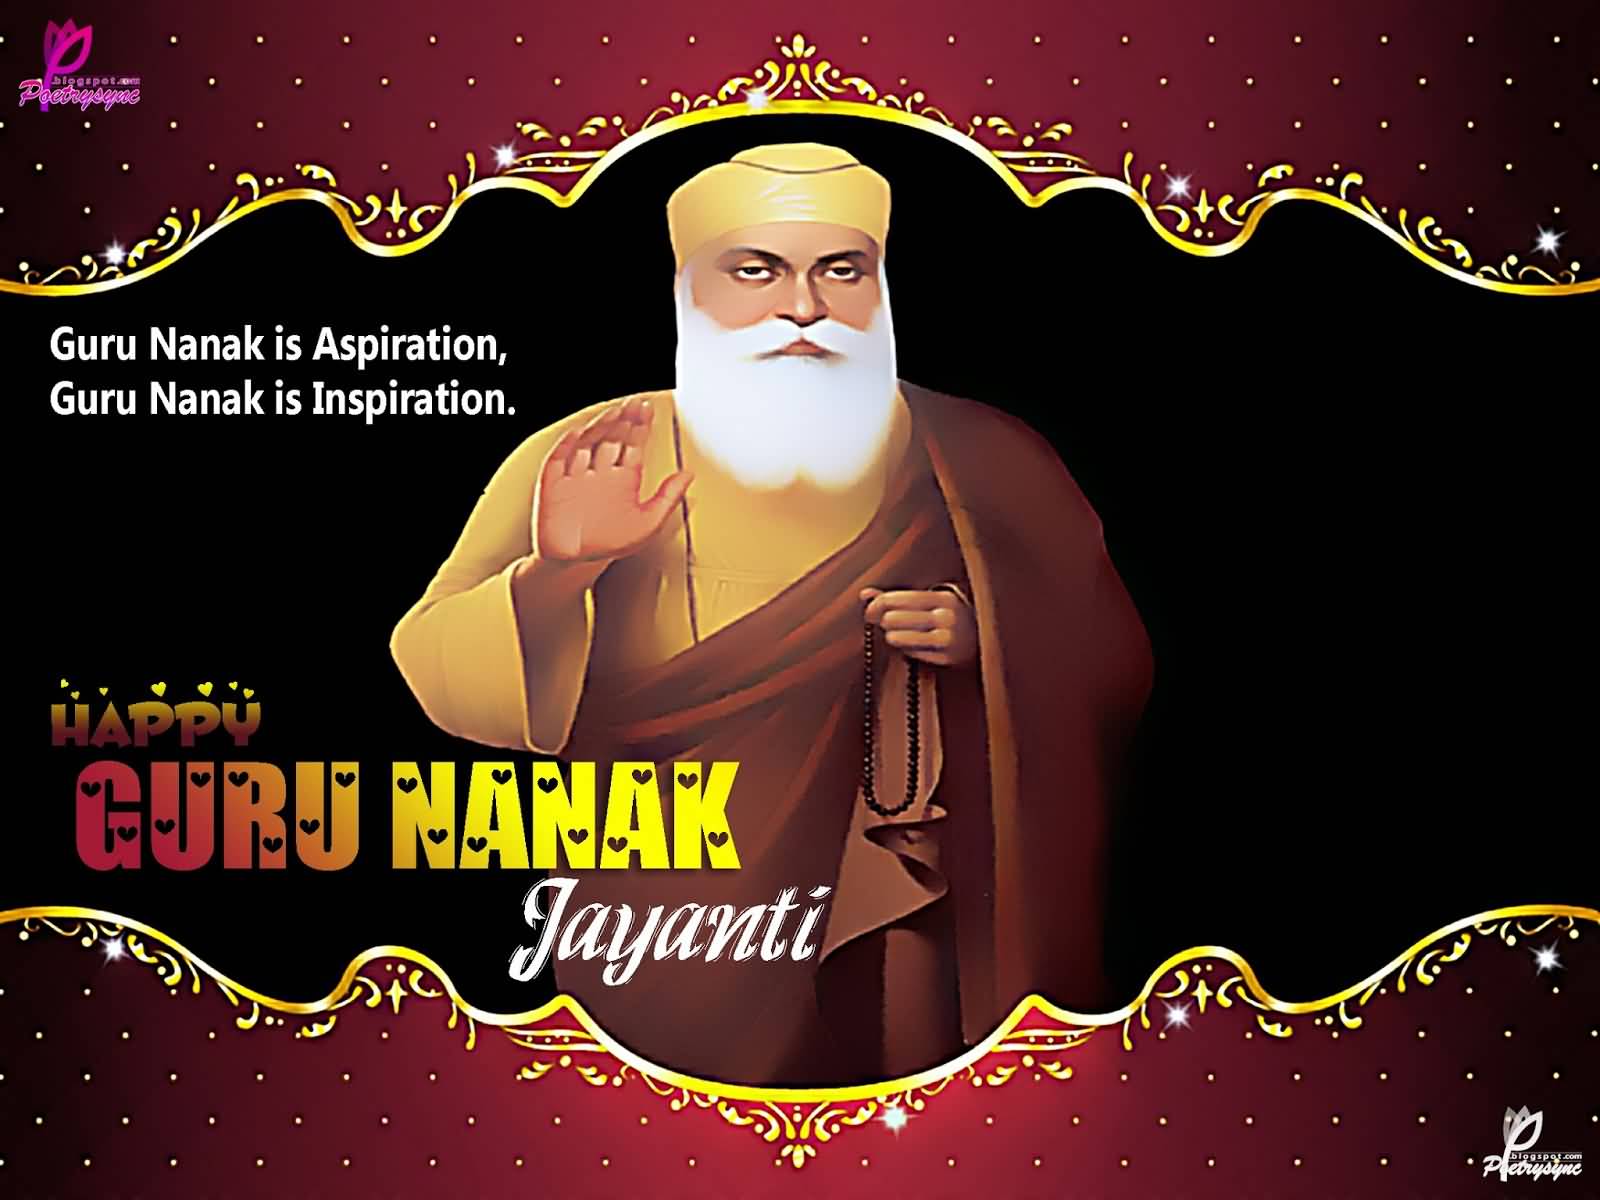 Happy Guru Nanak Jayanti 2016 Greeting Card